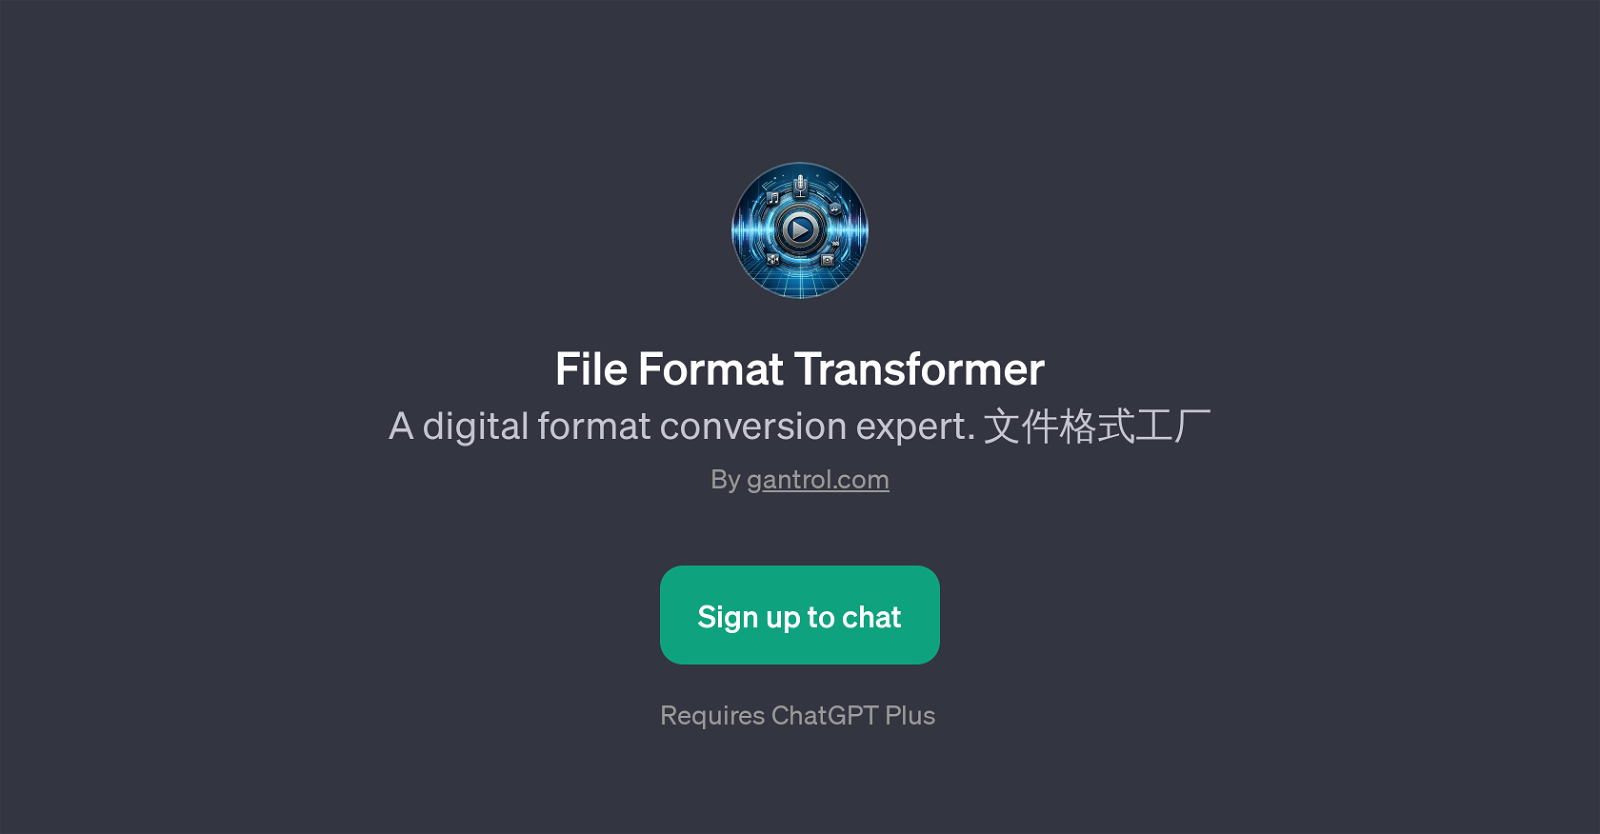 File Format Transformer website